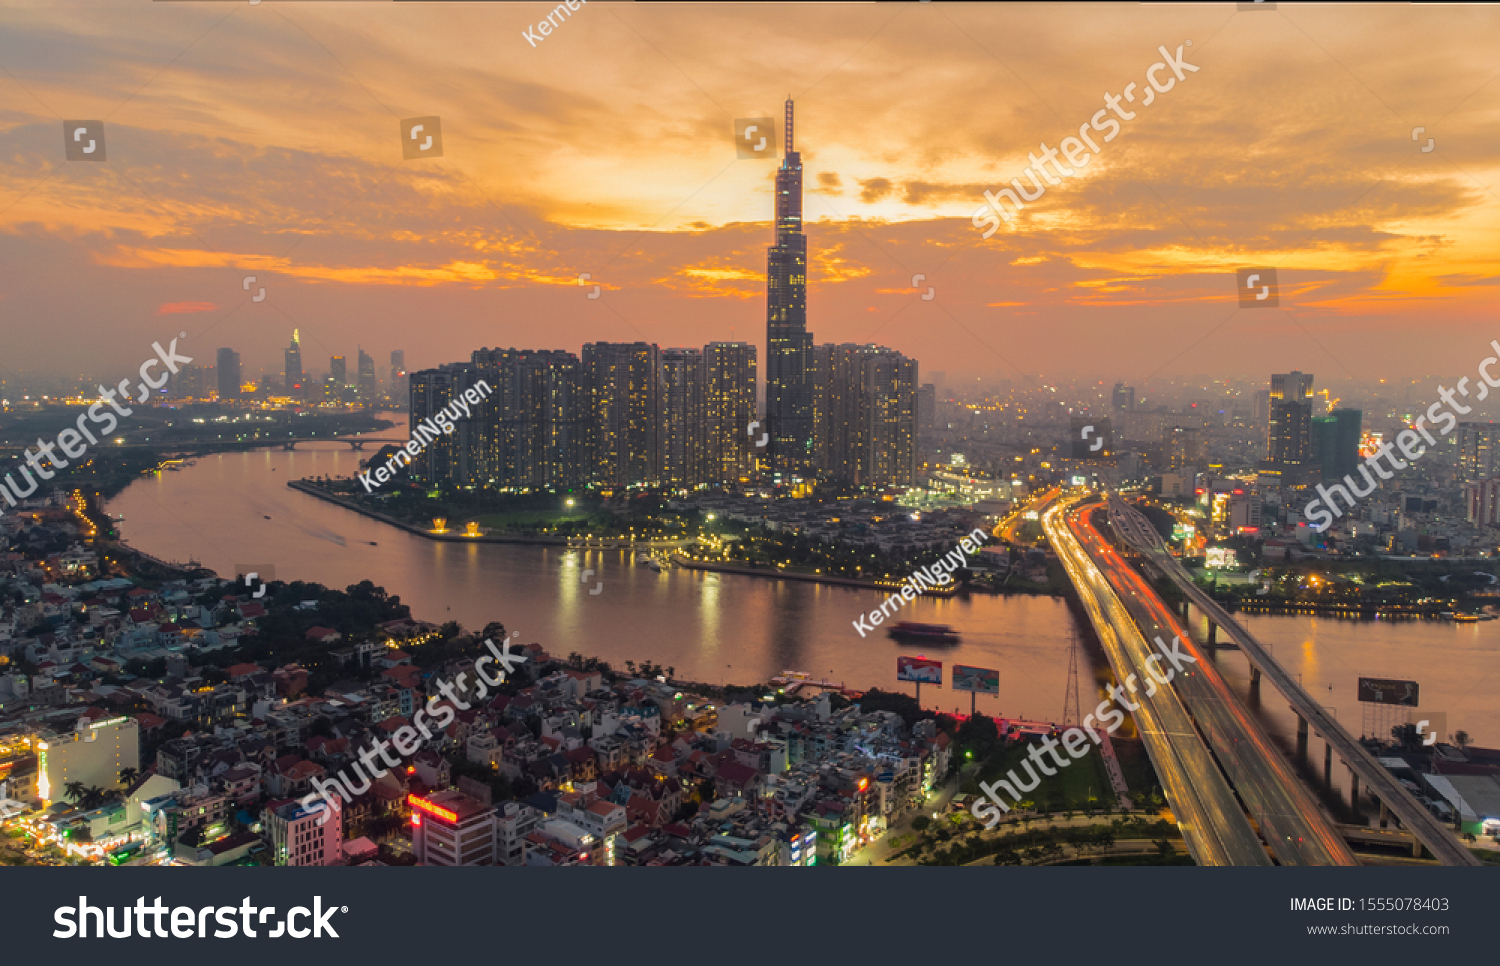 Saigon bridge Images, Stock Photos & Vectors | Shutterstock